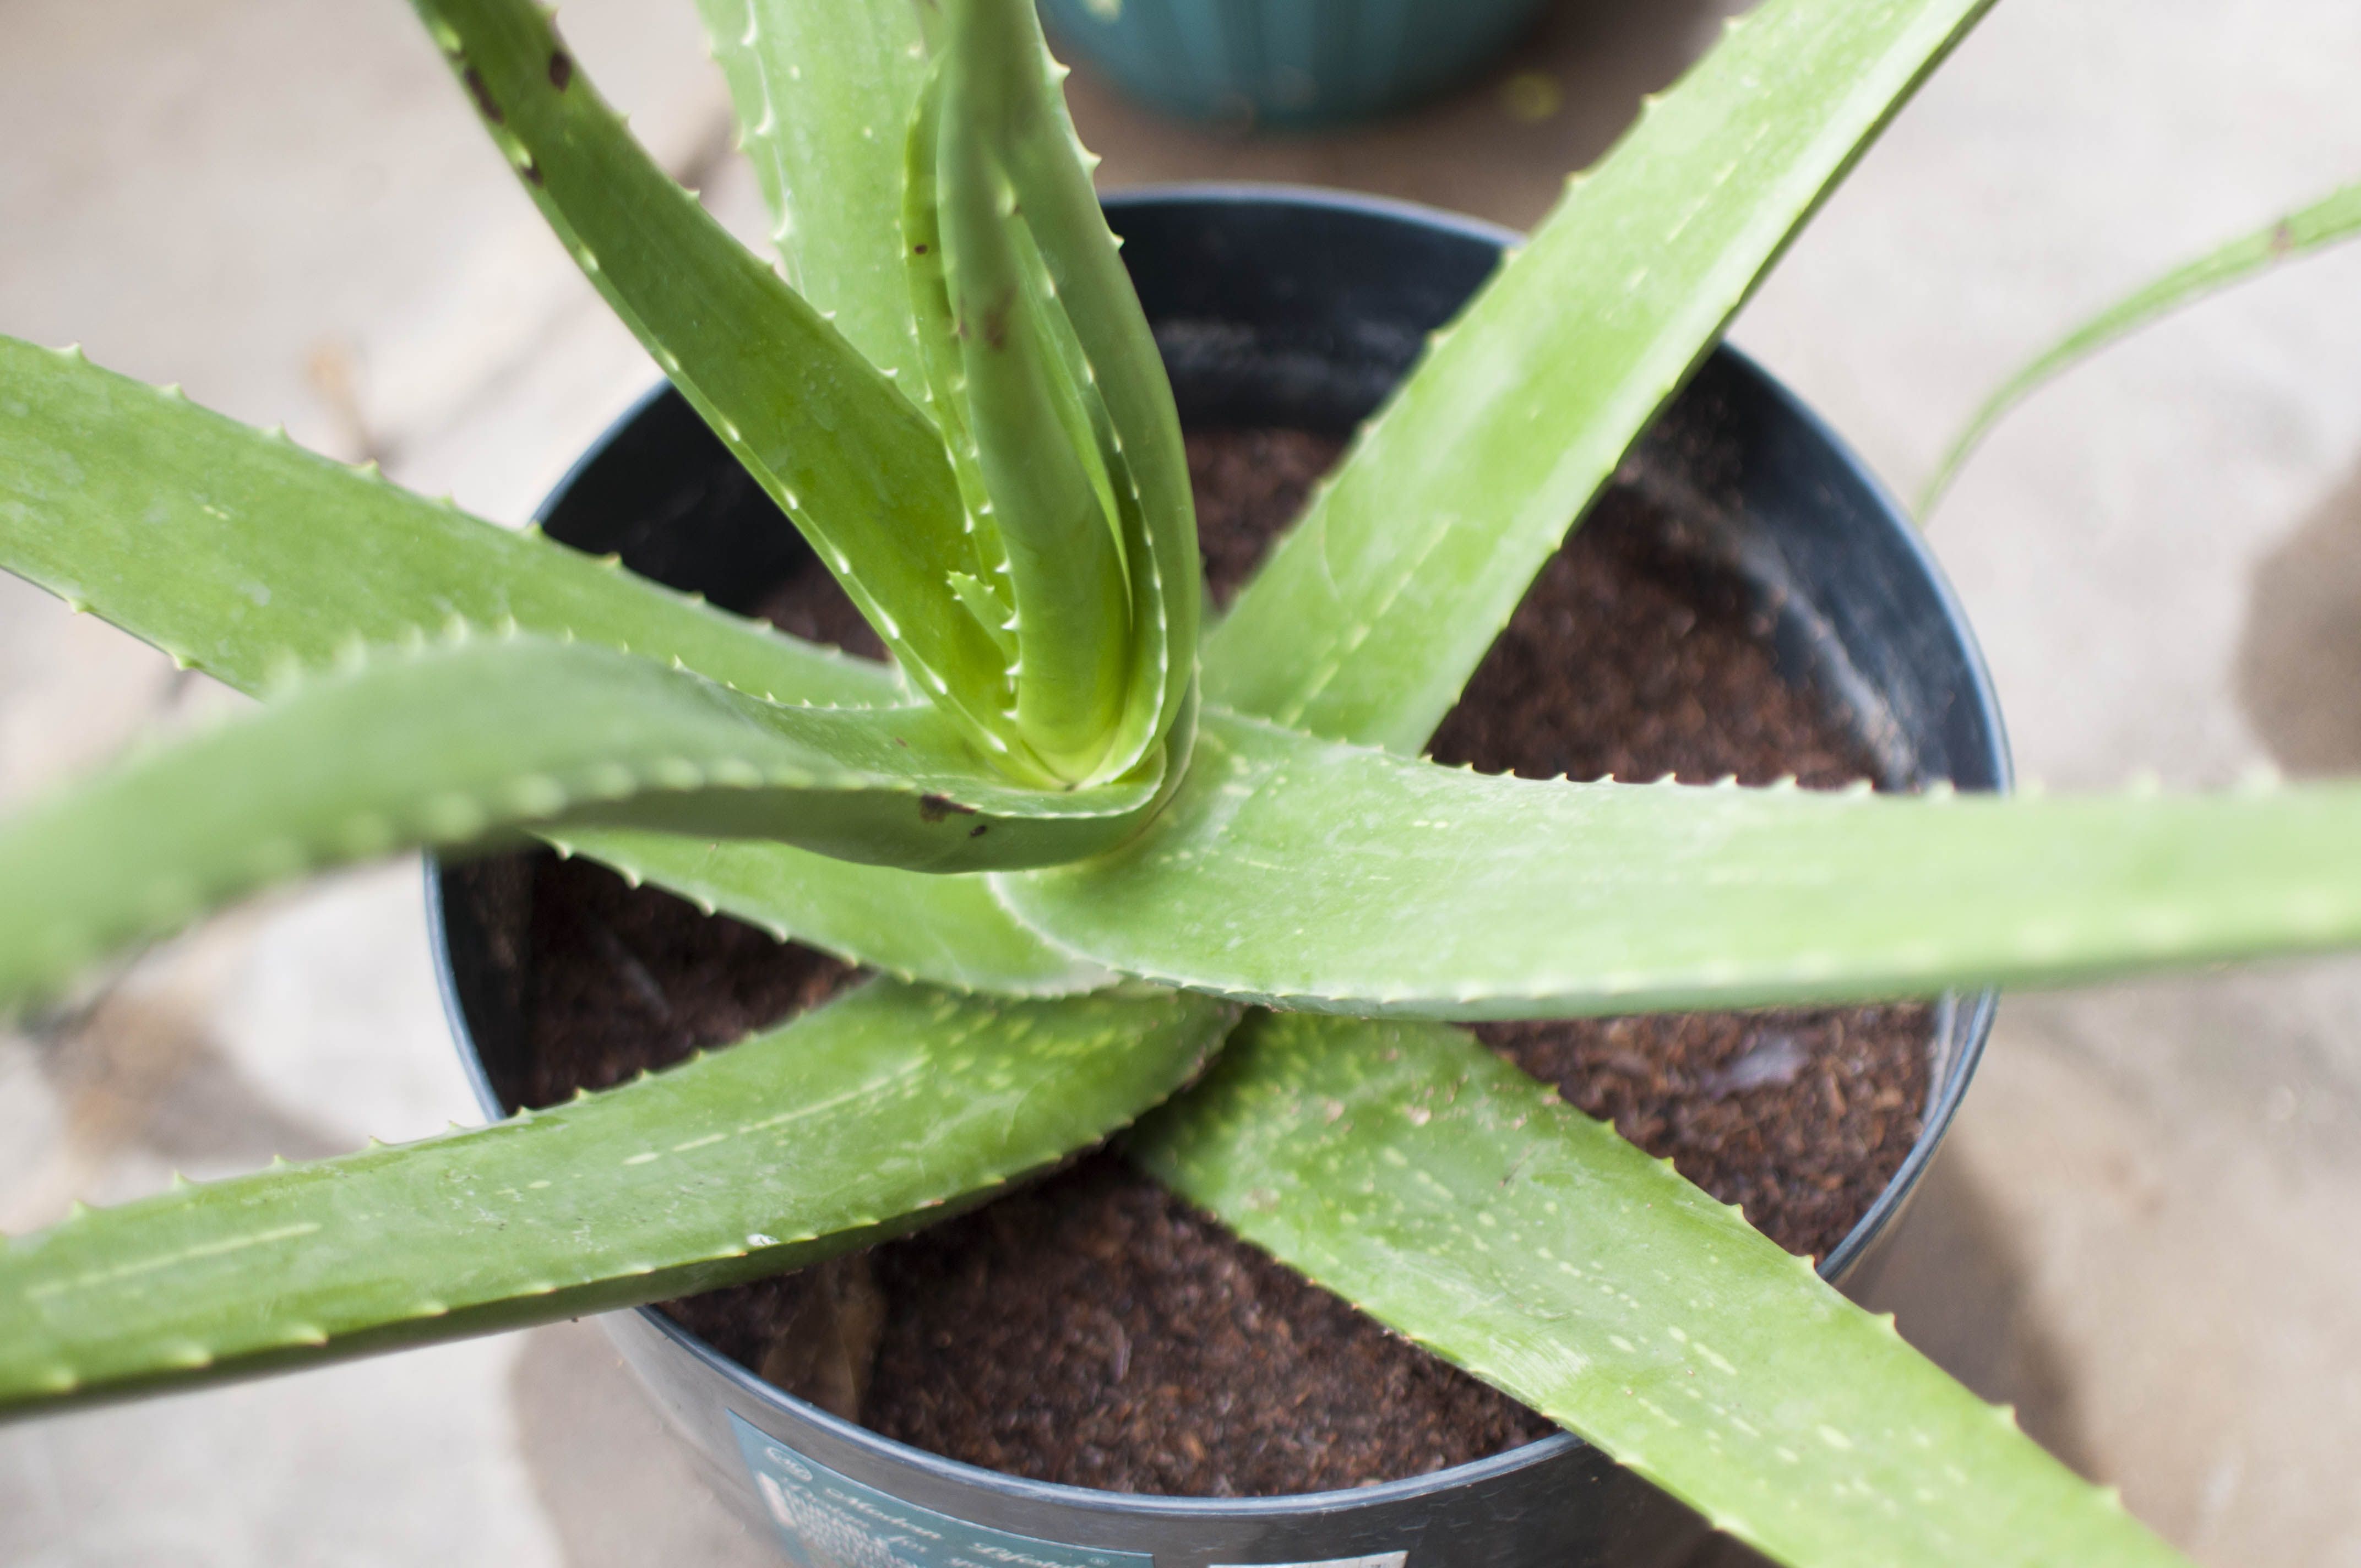 How to Grow Aloe Plants - What Kind of Soil Aloe Plants Need?